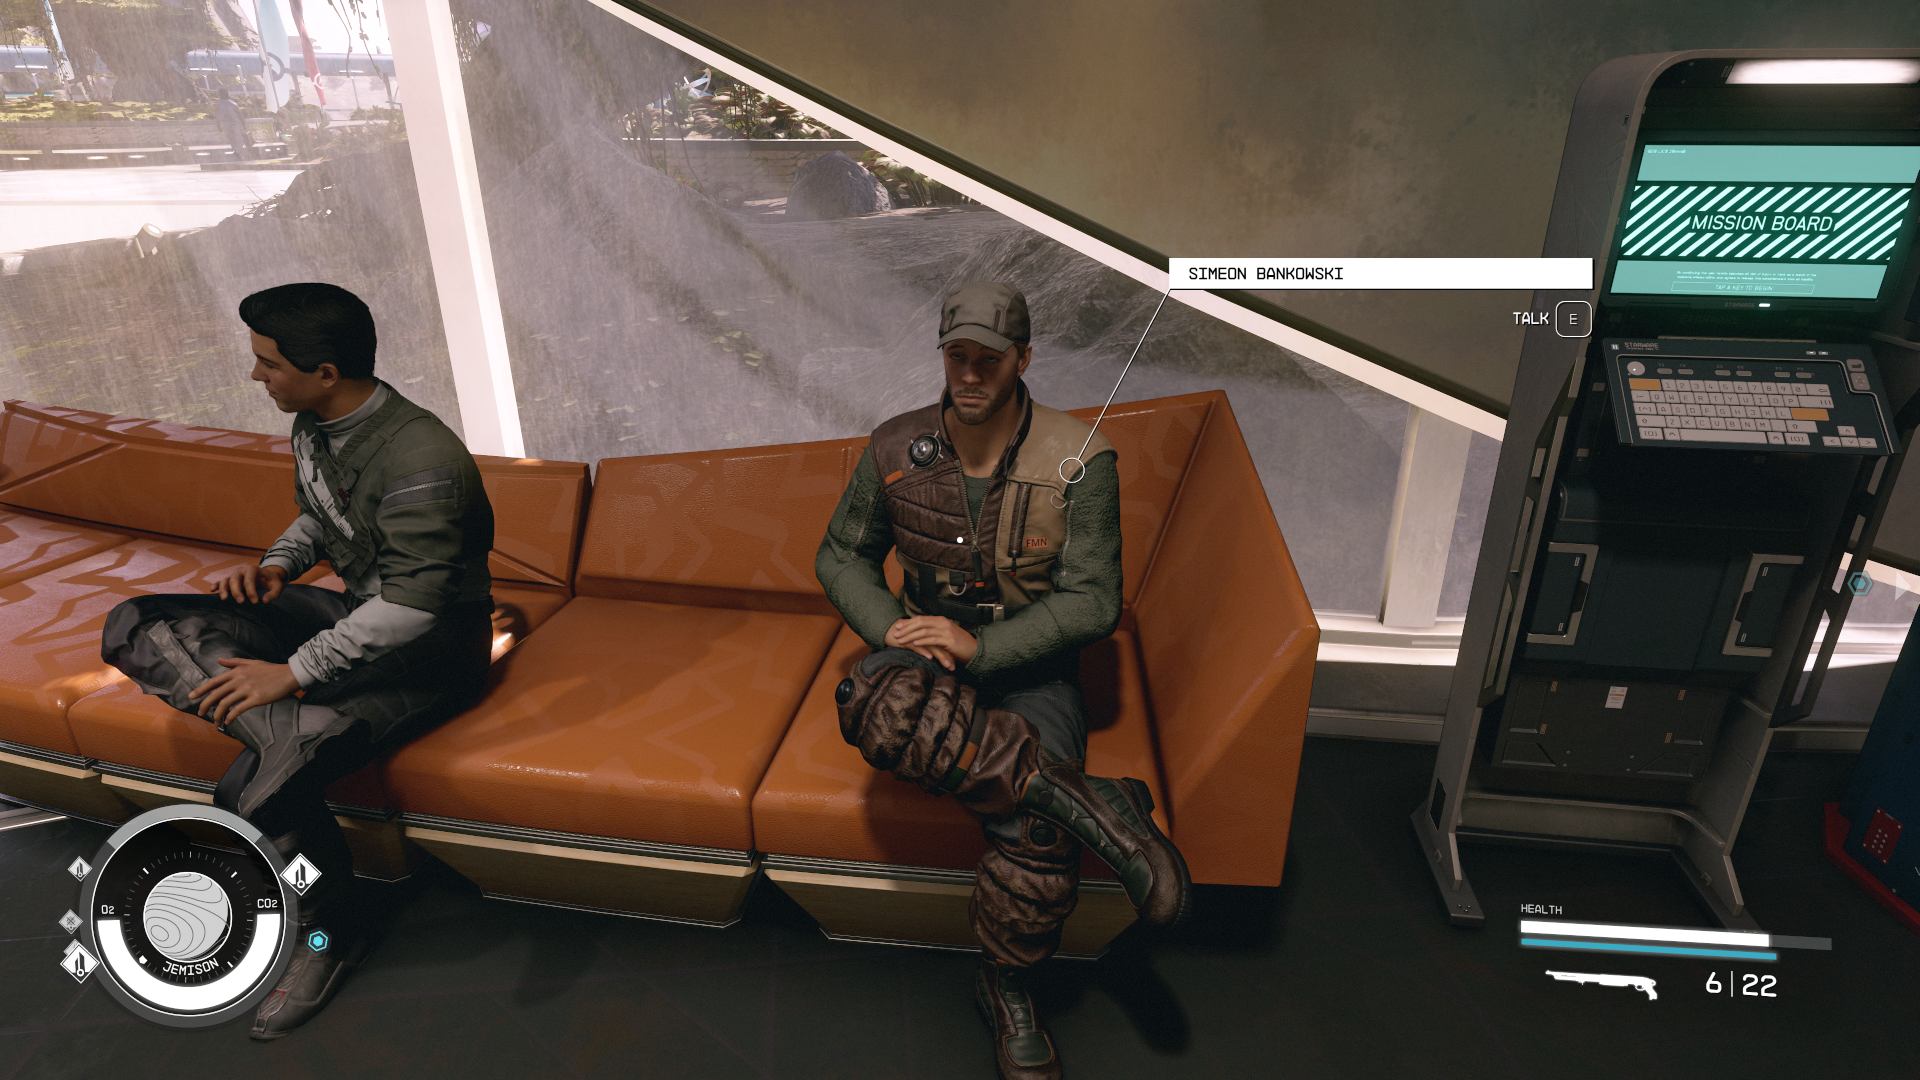 Starfield companions - Shot of man sitting on a sofa